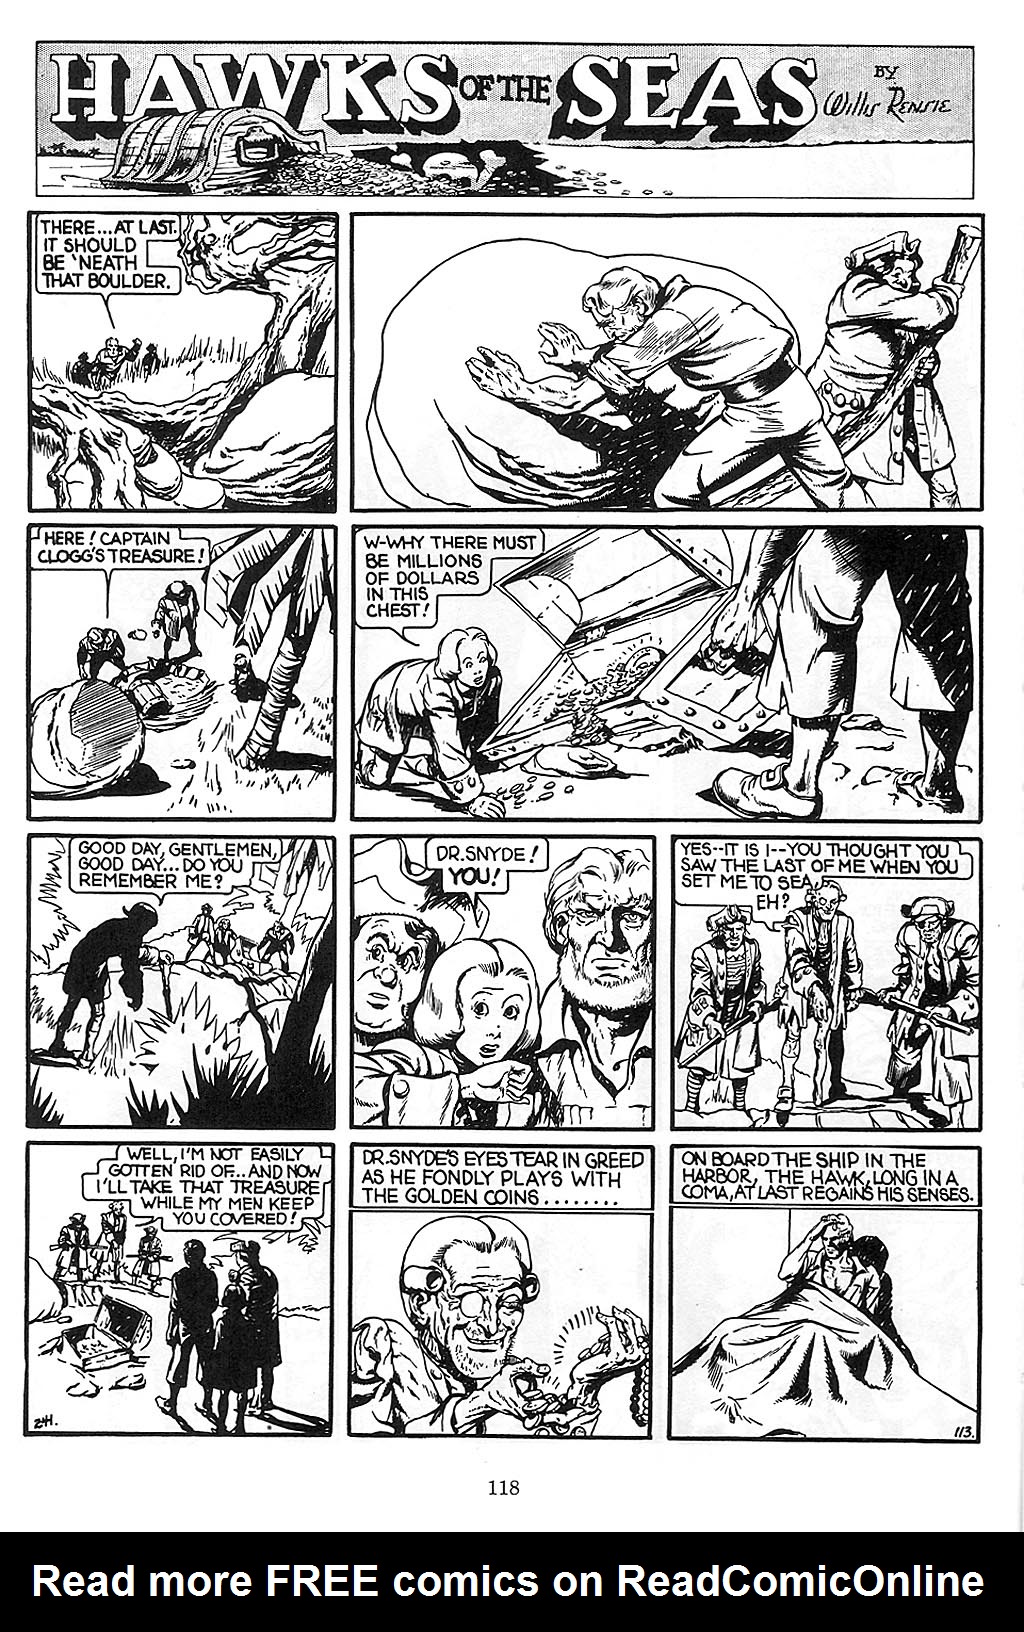 Read online Will Eisner's Hawks of the Seas comic -  Issue # TPB - 119